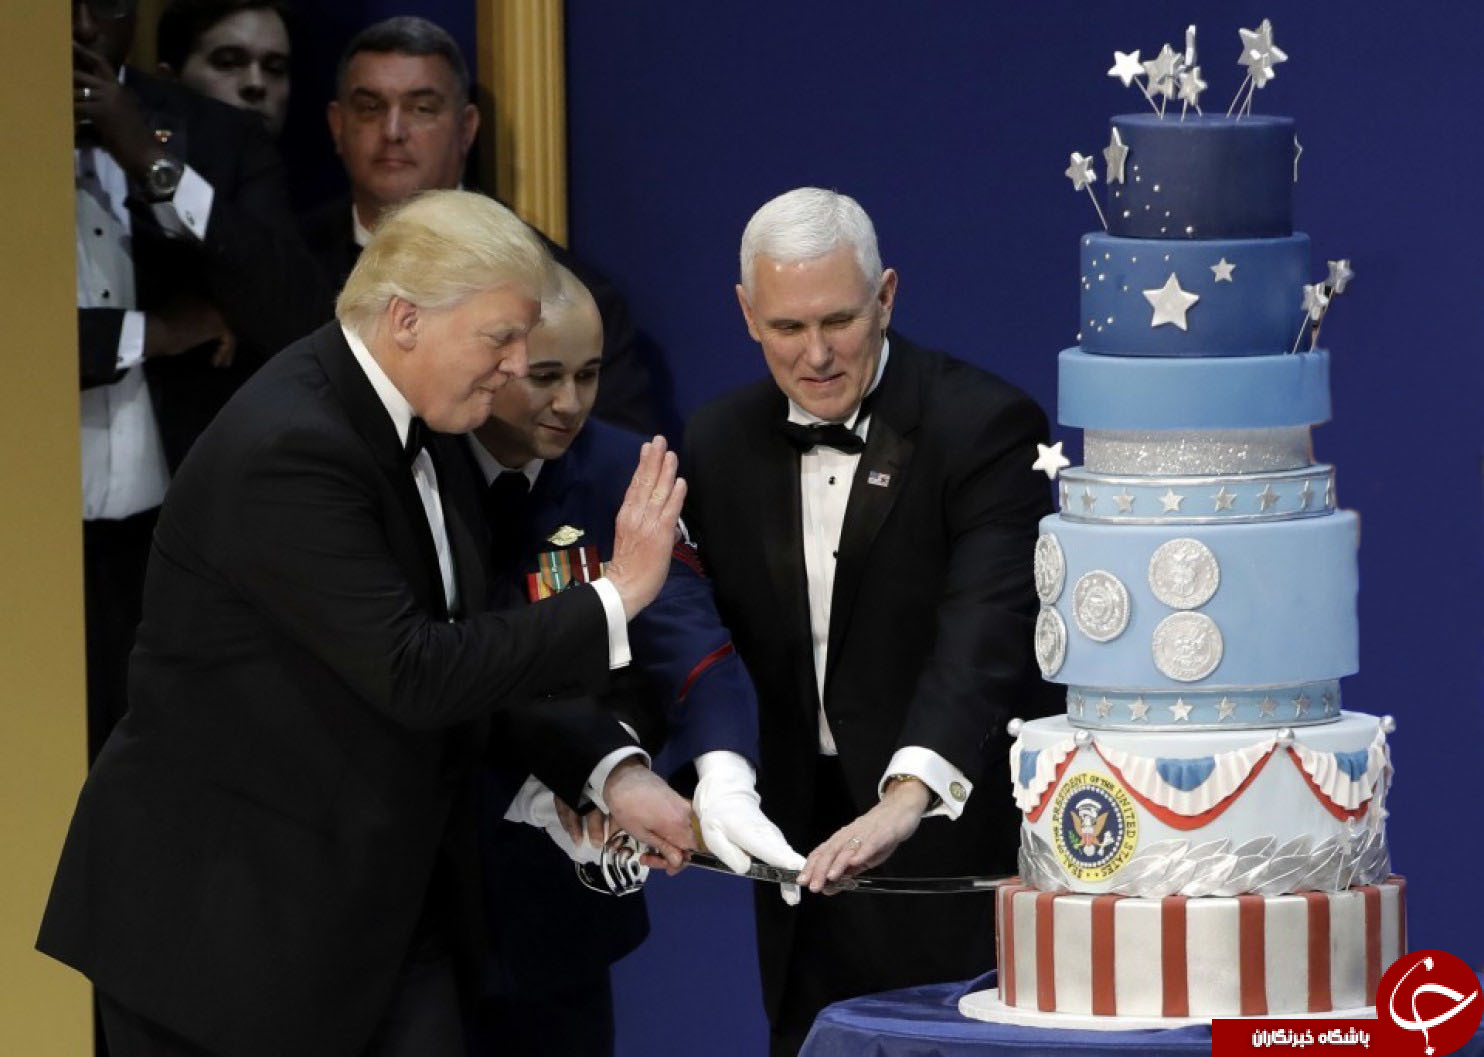 کپی برداری کیک مراسم تحلیف ترامپ از کیک مراسم تحلیف اوباما + تصویر